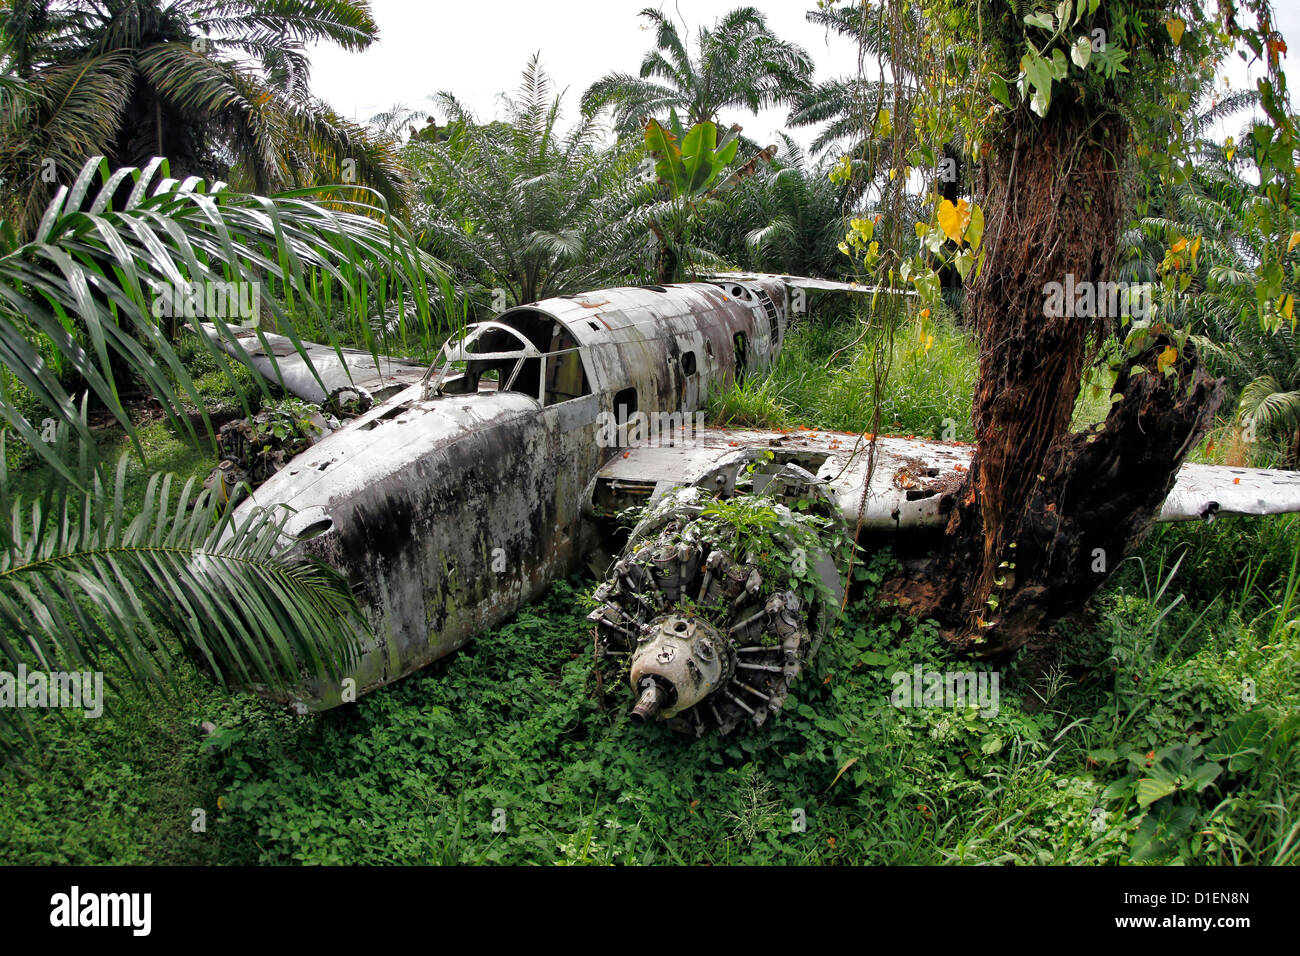 New Zealand plane wreck from the second world war near Walindi Resort, Papua New Guinea Stock Photo